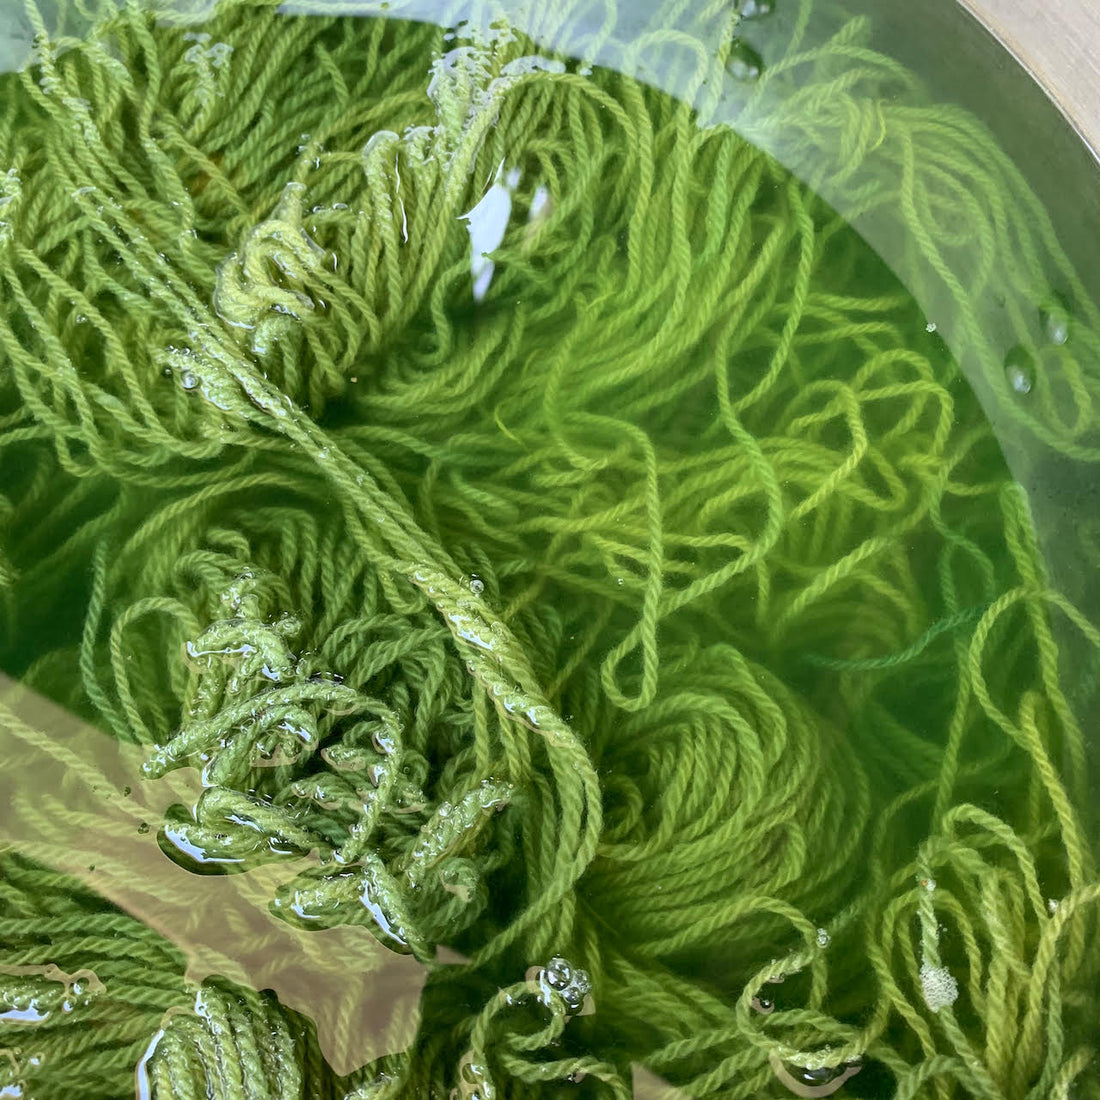  lovely spring green yarn being stirred in a dye pot  